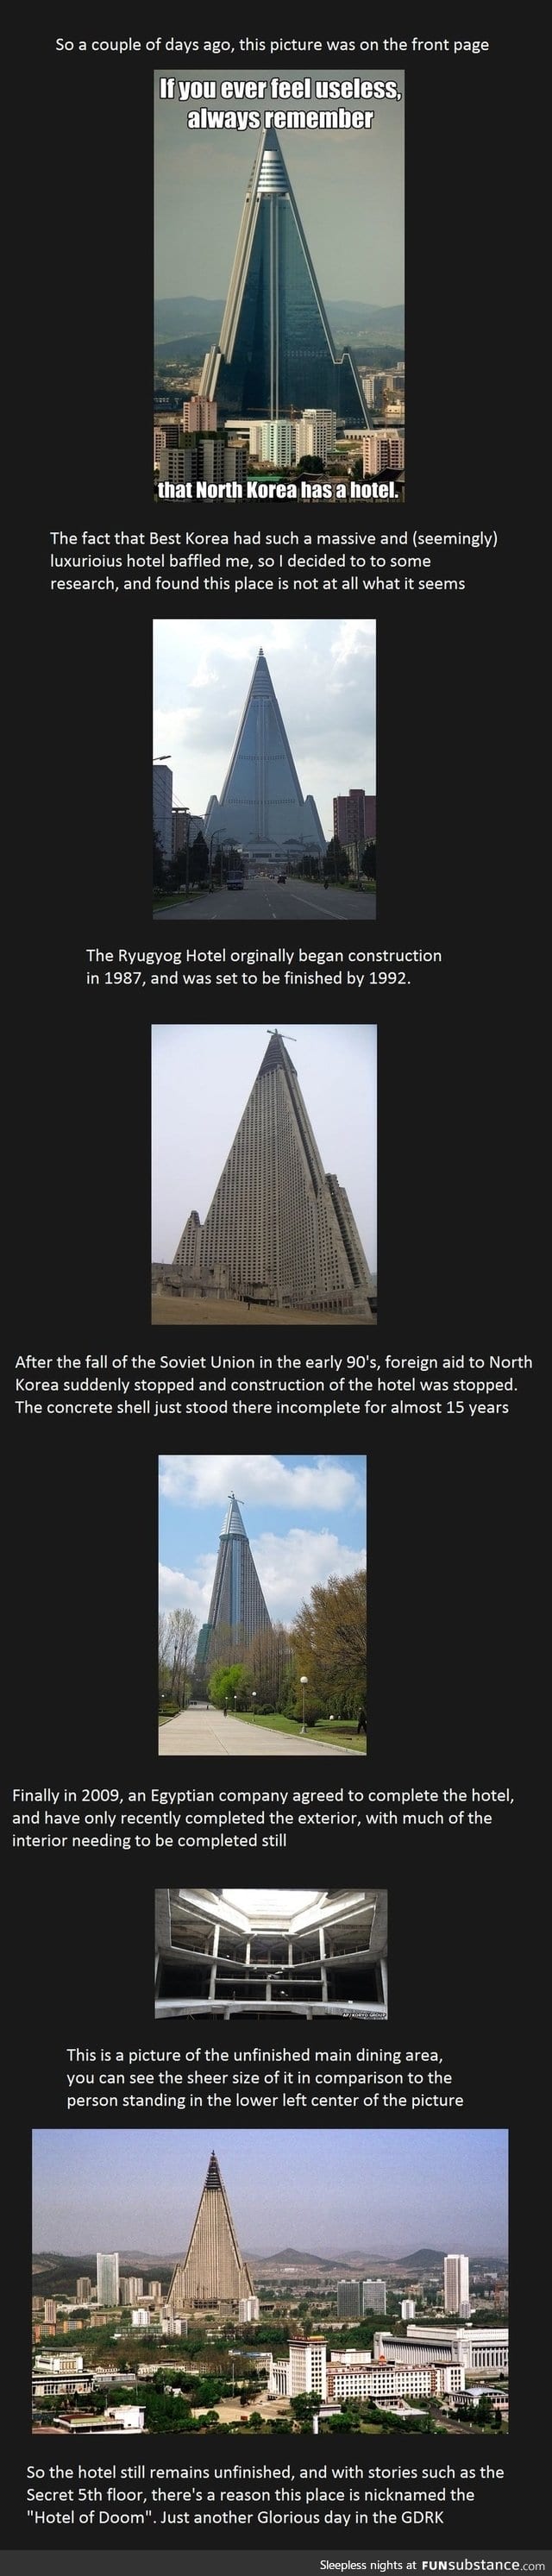 Useless hotel in North Korea